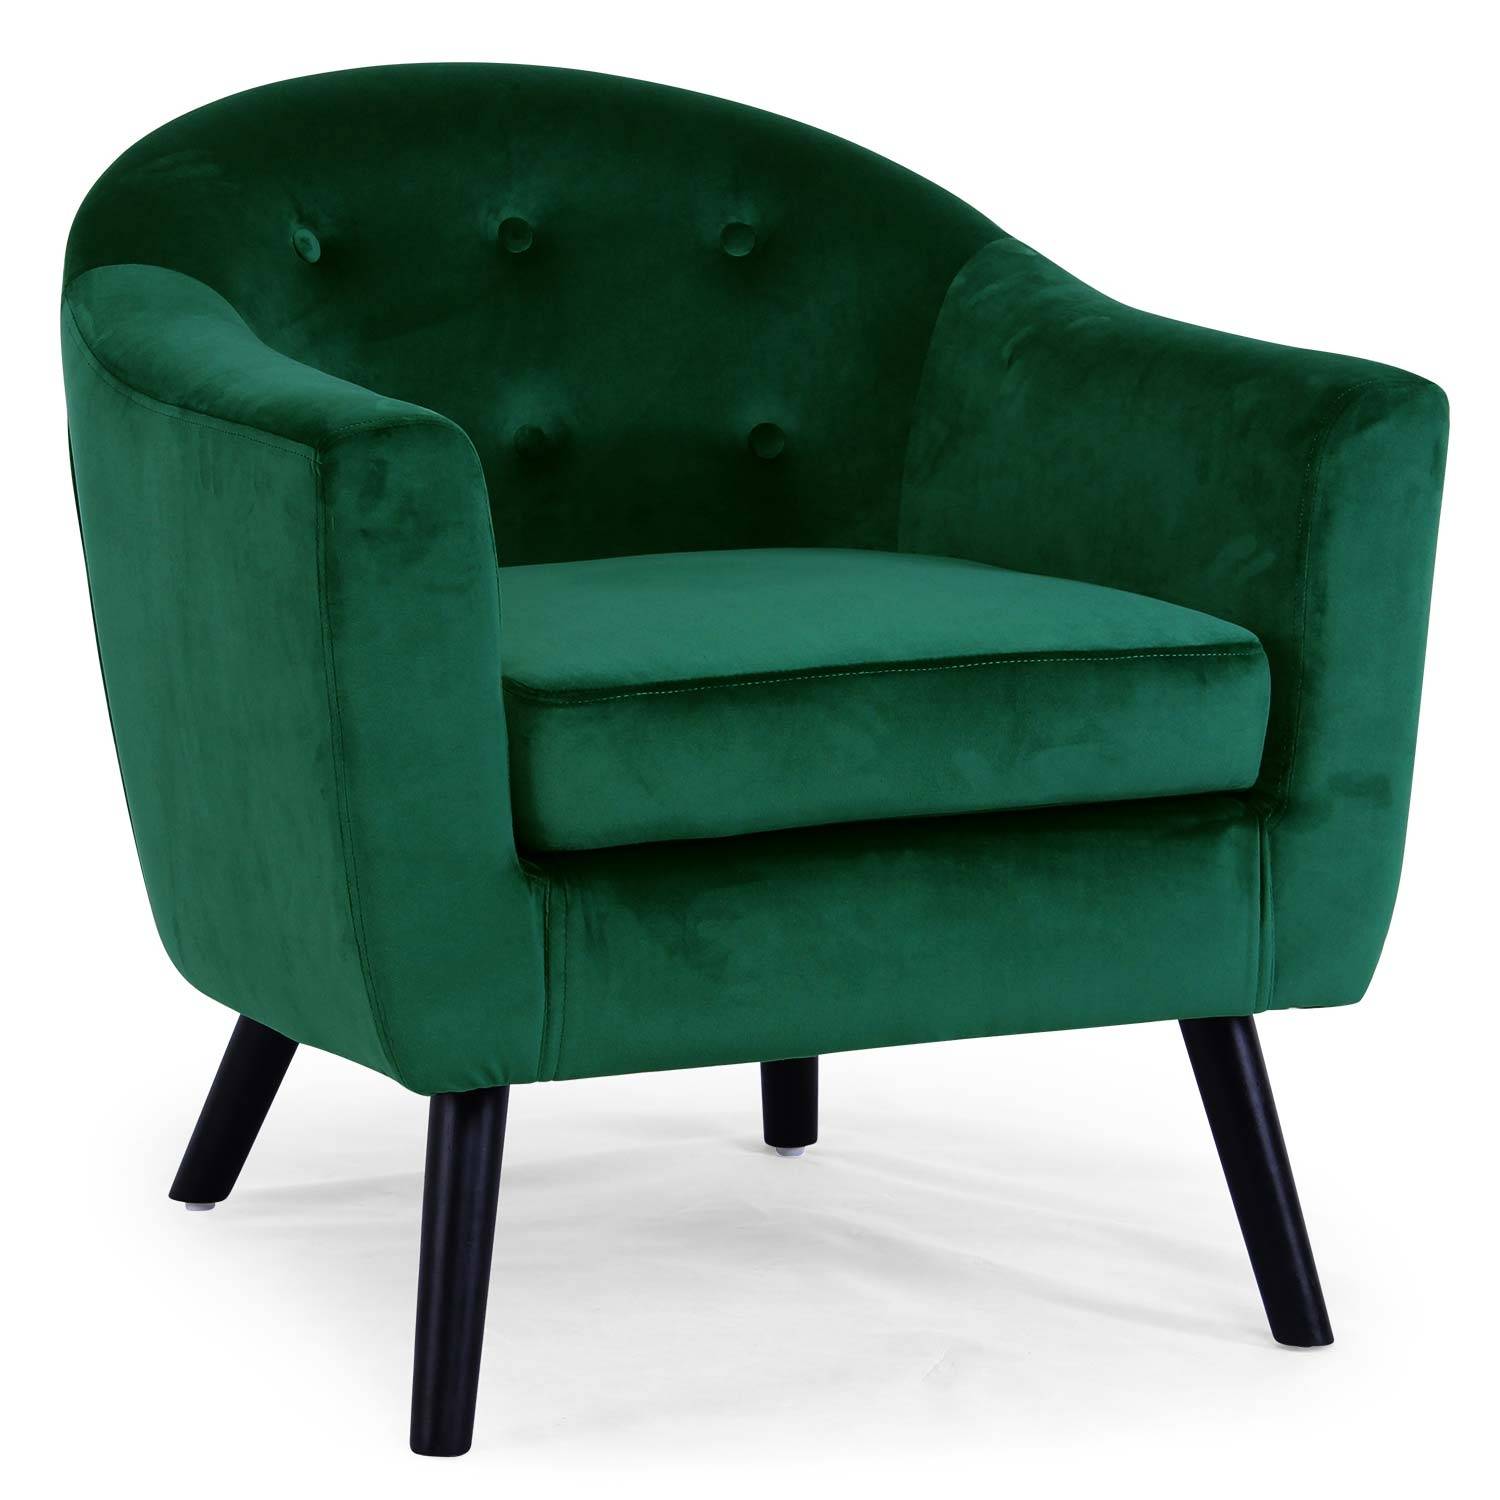 Sofa Savoy 1 plz, terciopelo verde